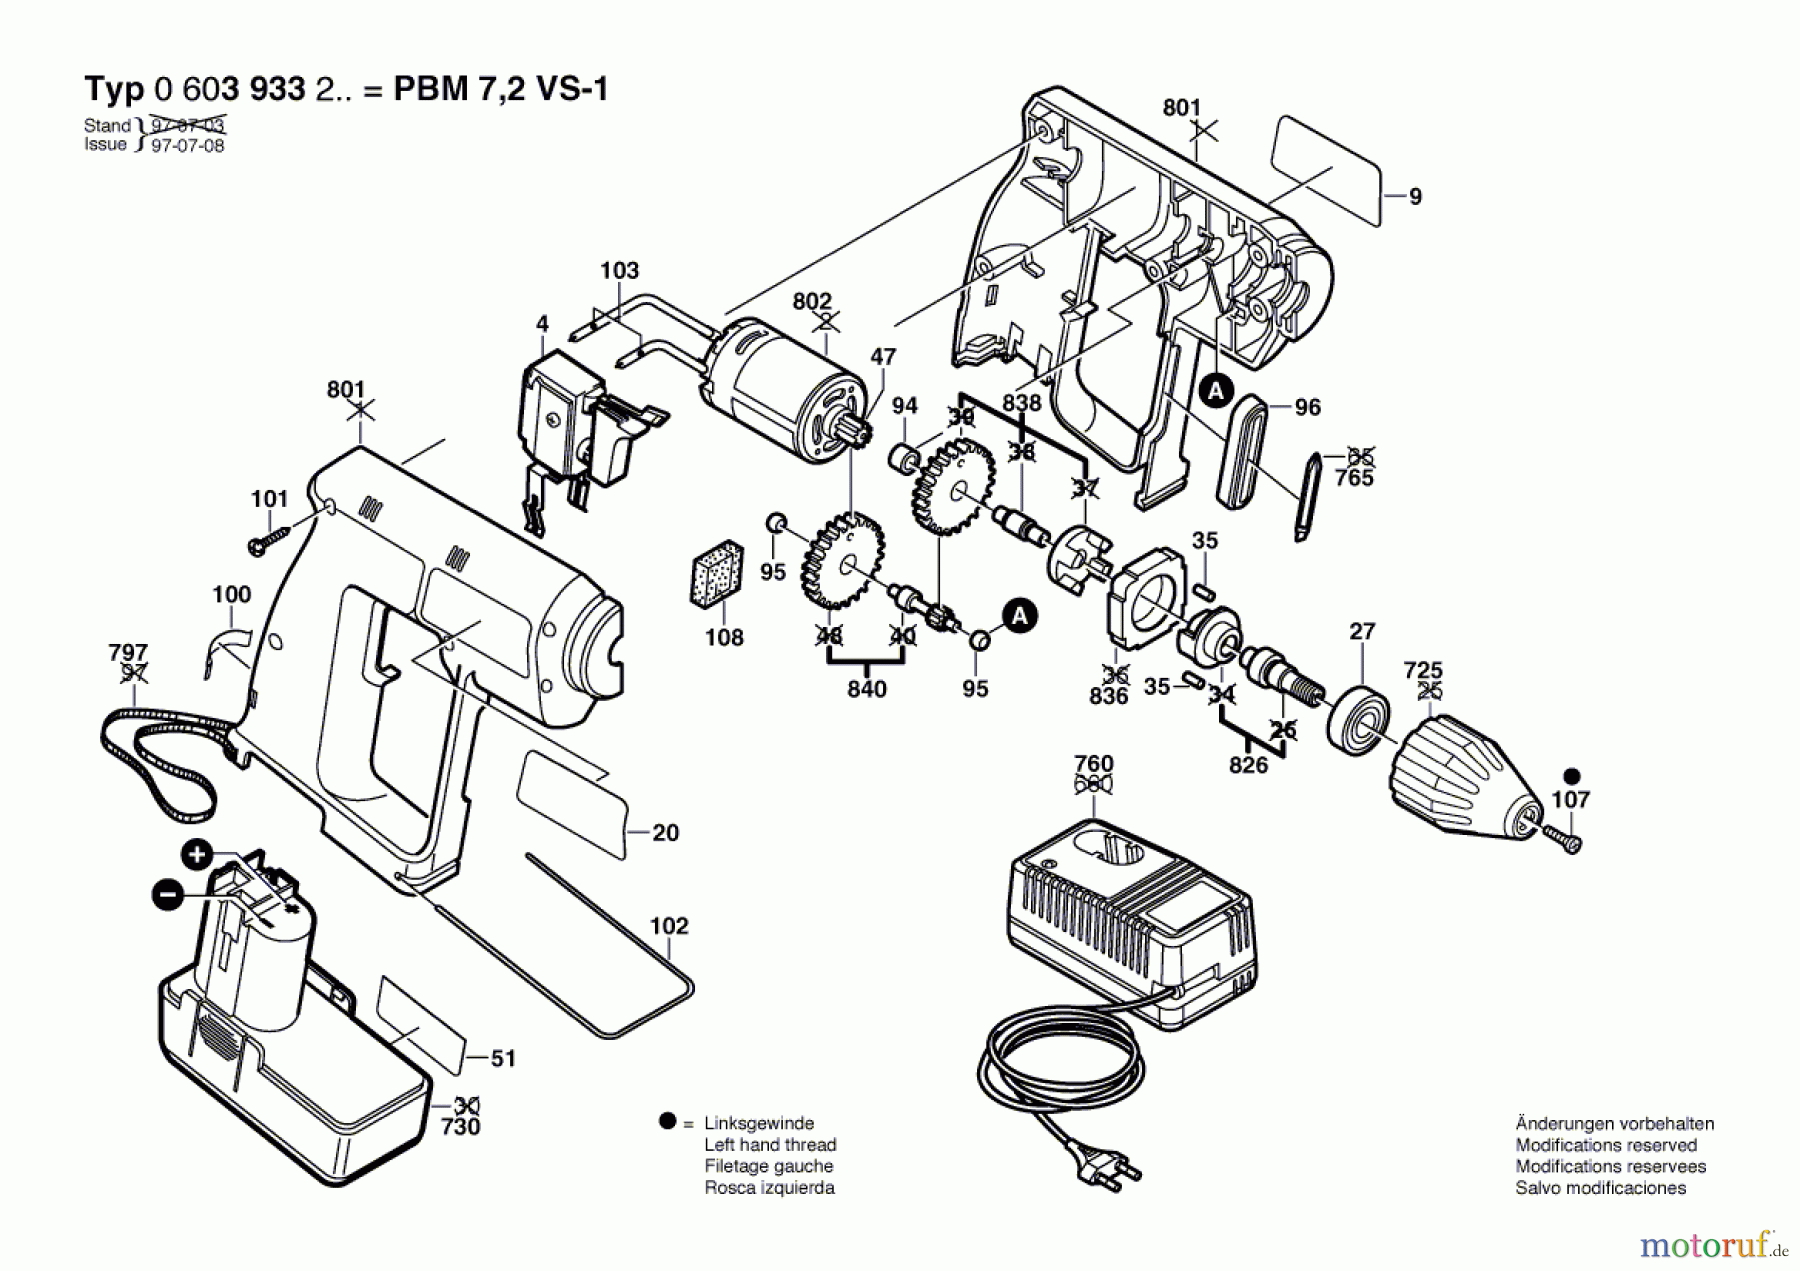  Bosch Akku Werkzeug Akku-Bohrmaschine PBM 7,2 VS-1 Seite 1